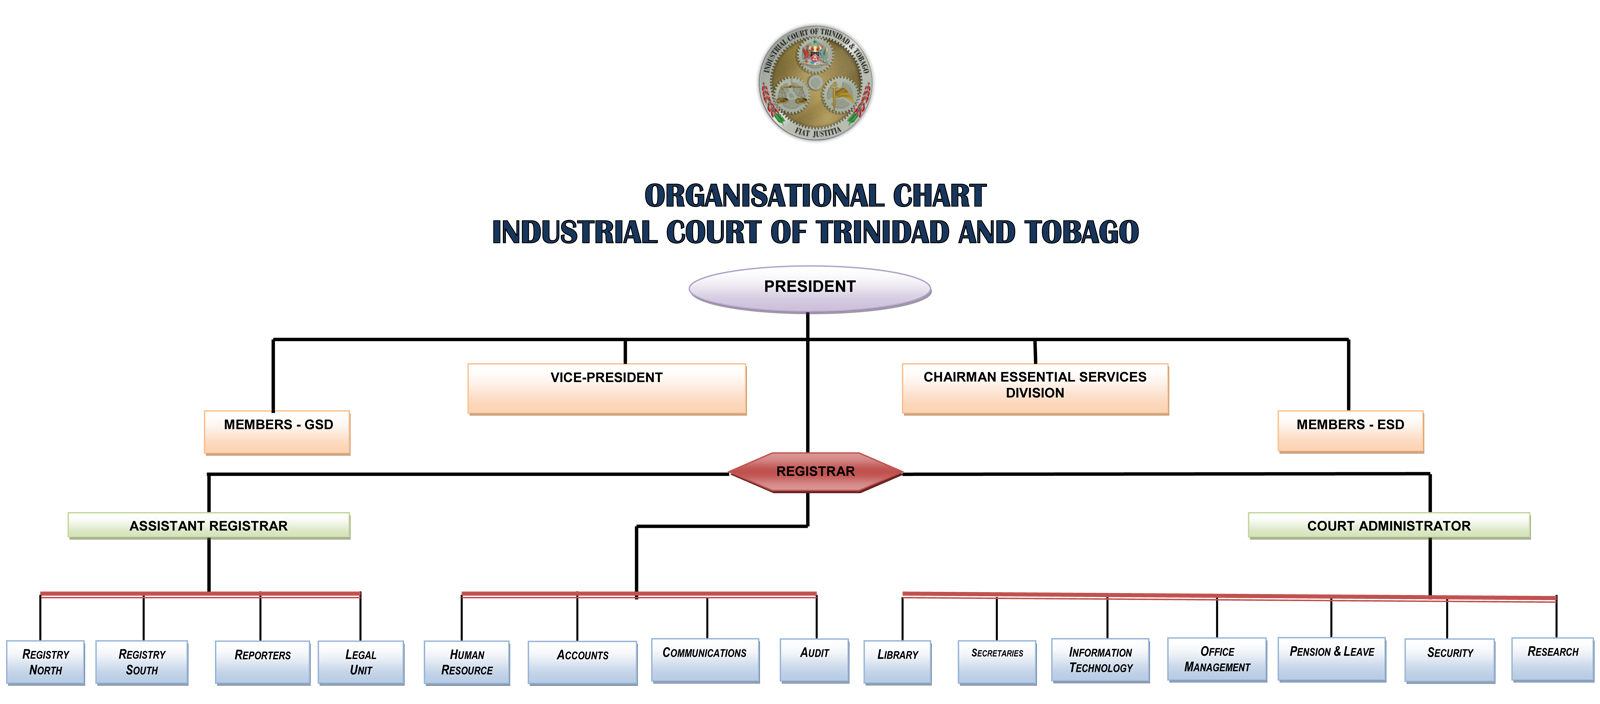 ORGANISATIONAL CHART INDUSTRIAL COURT 2016